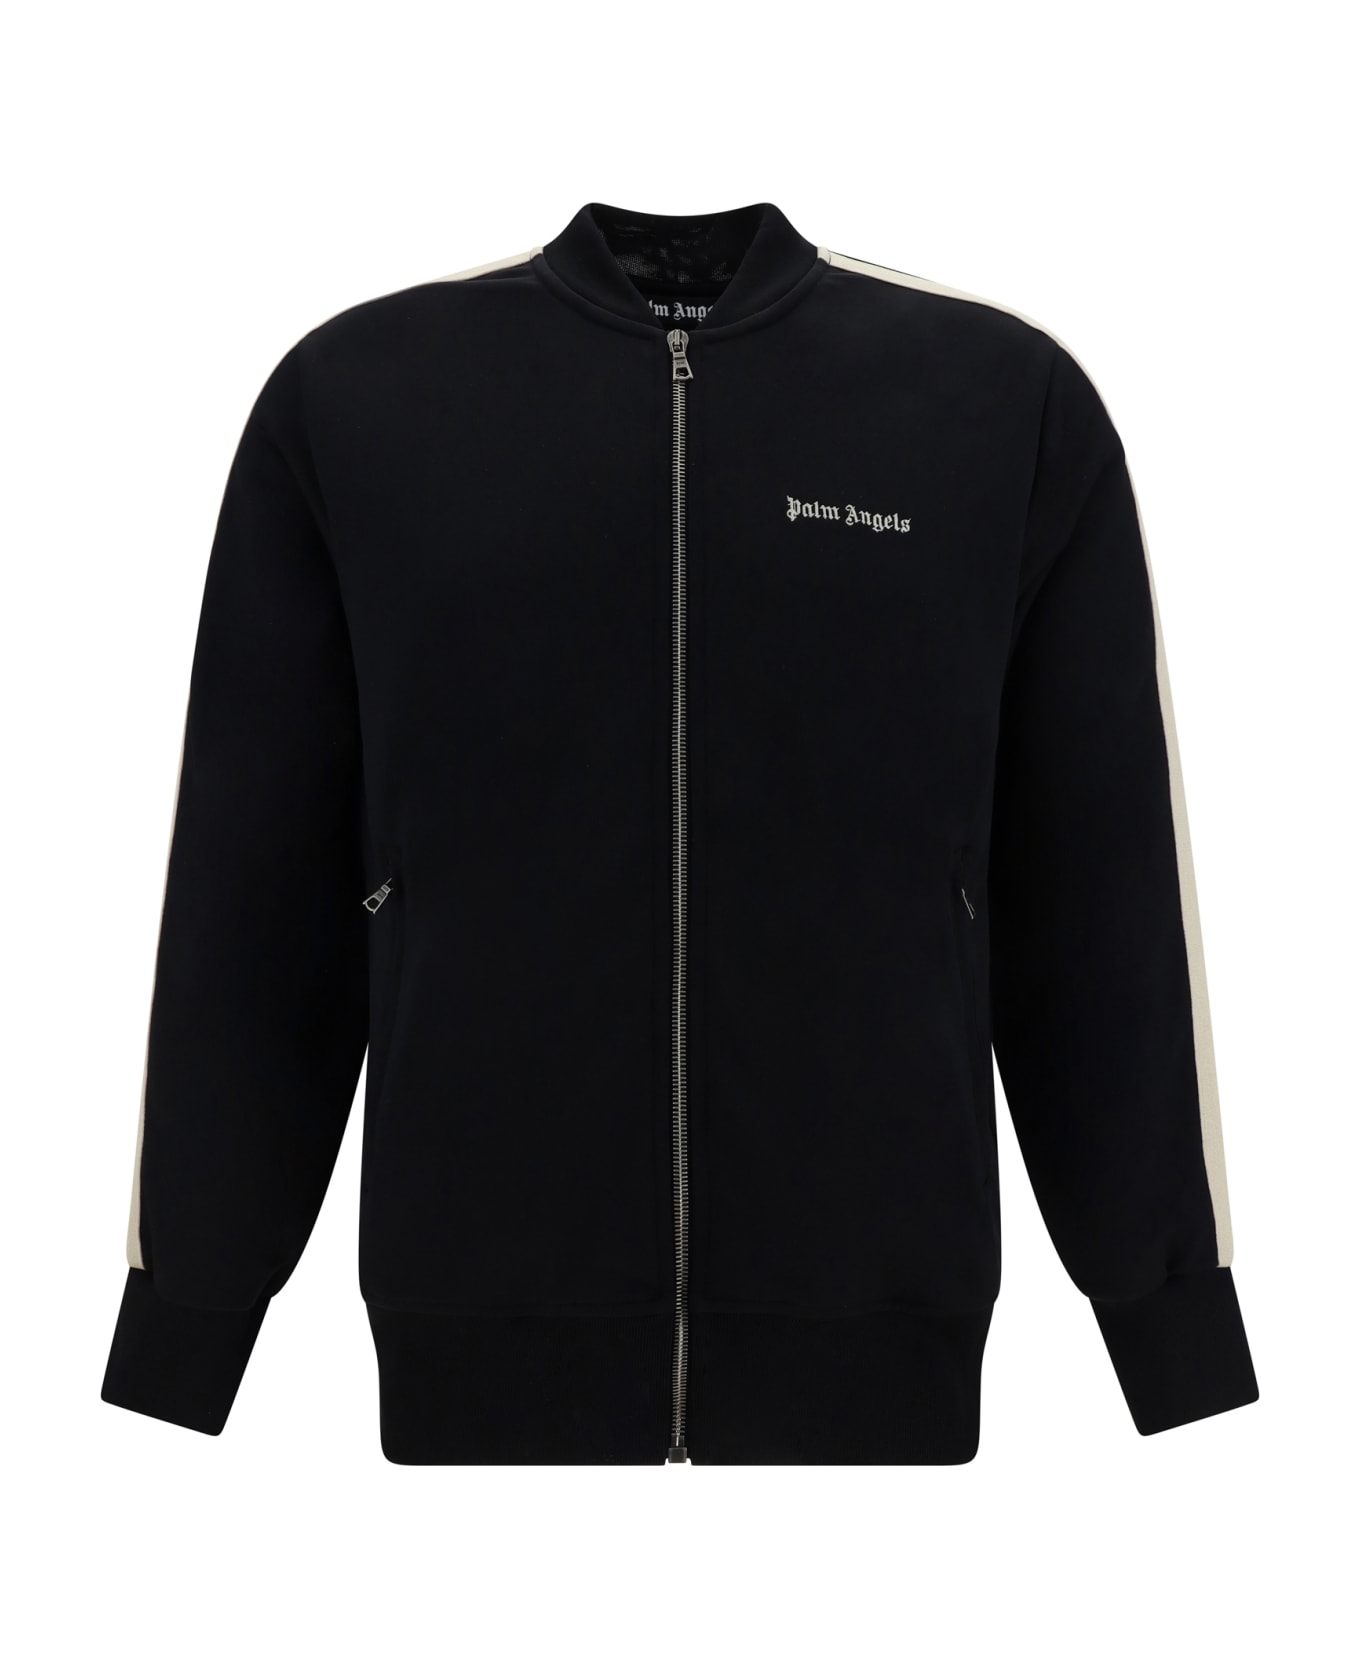 Palm Angels Track Sweatshirt With Zip - Black Off White